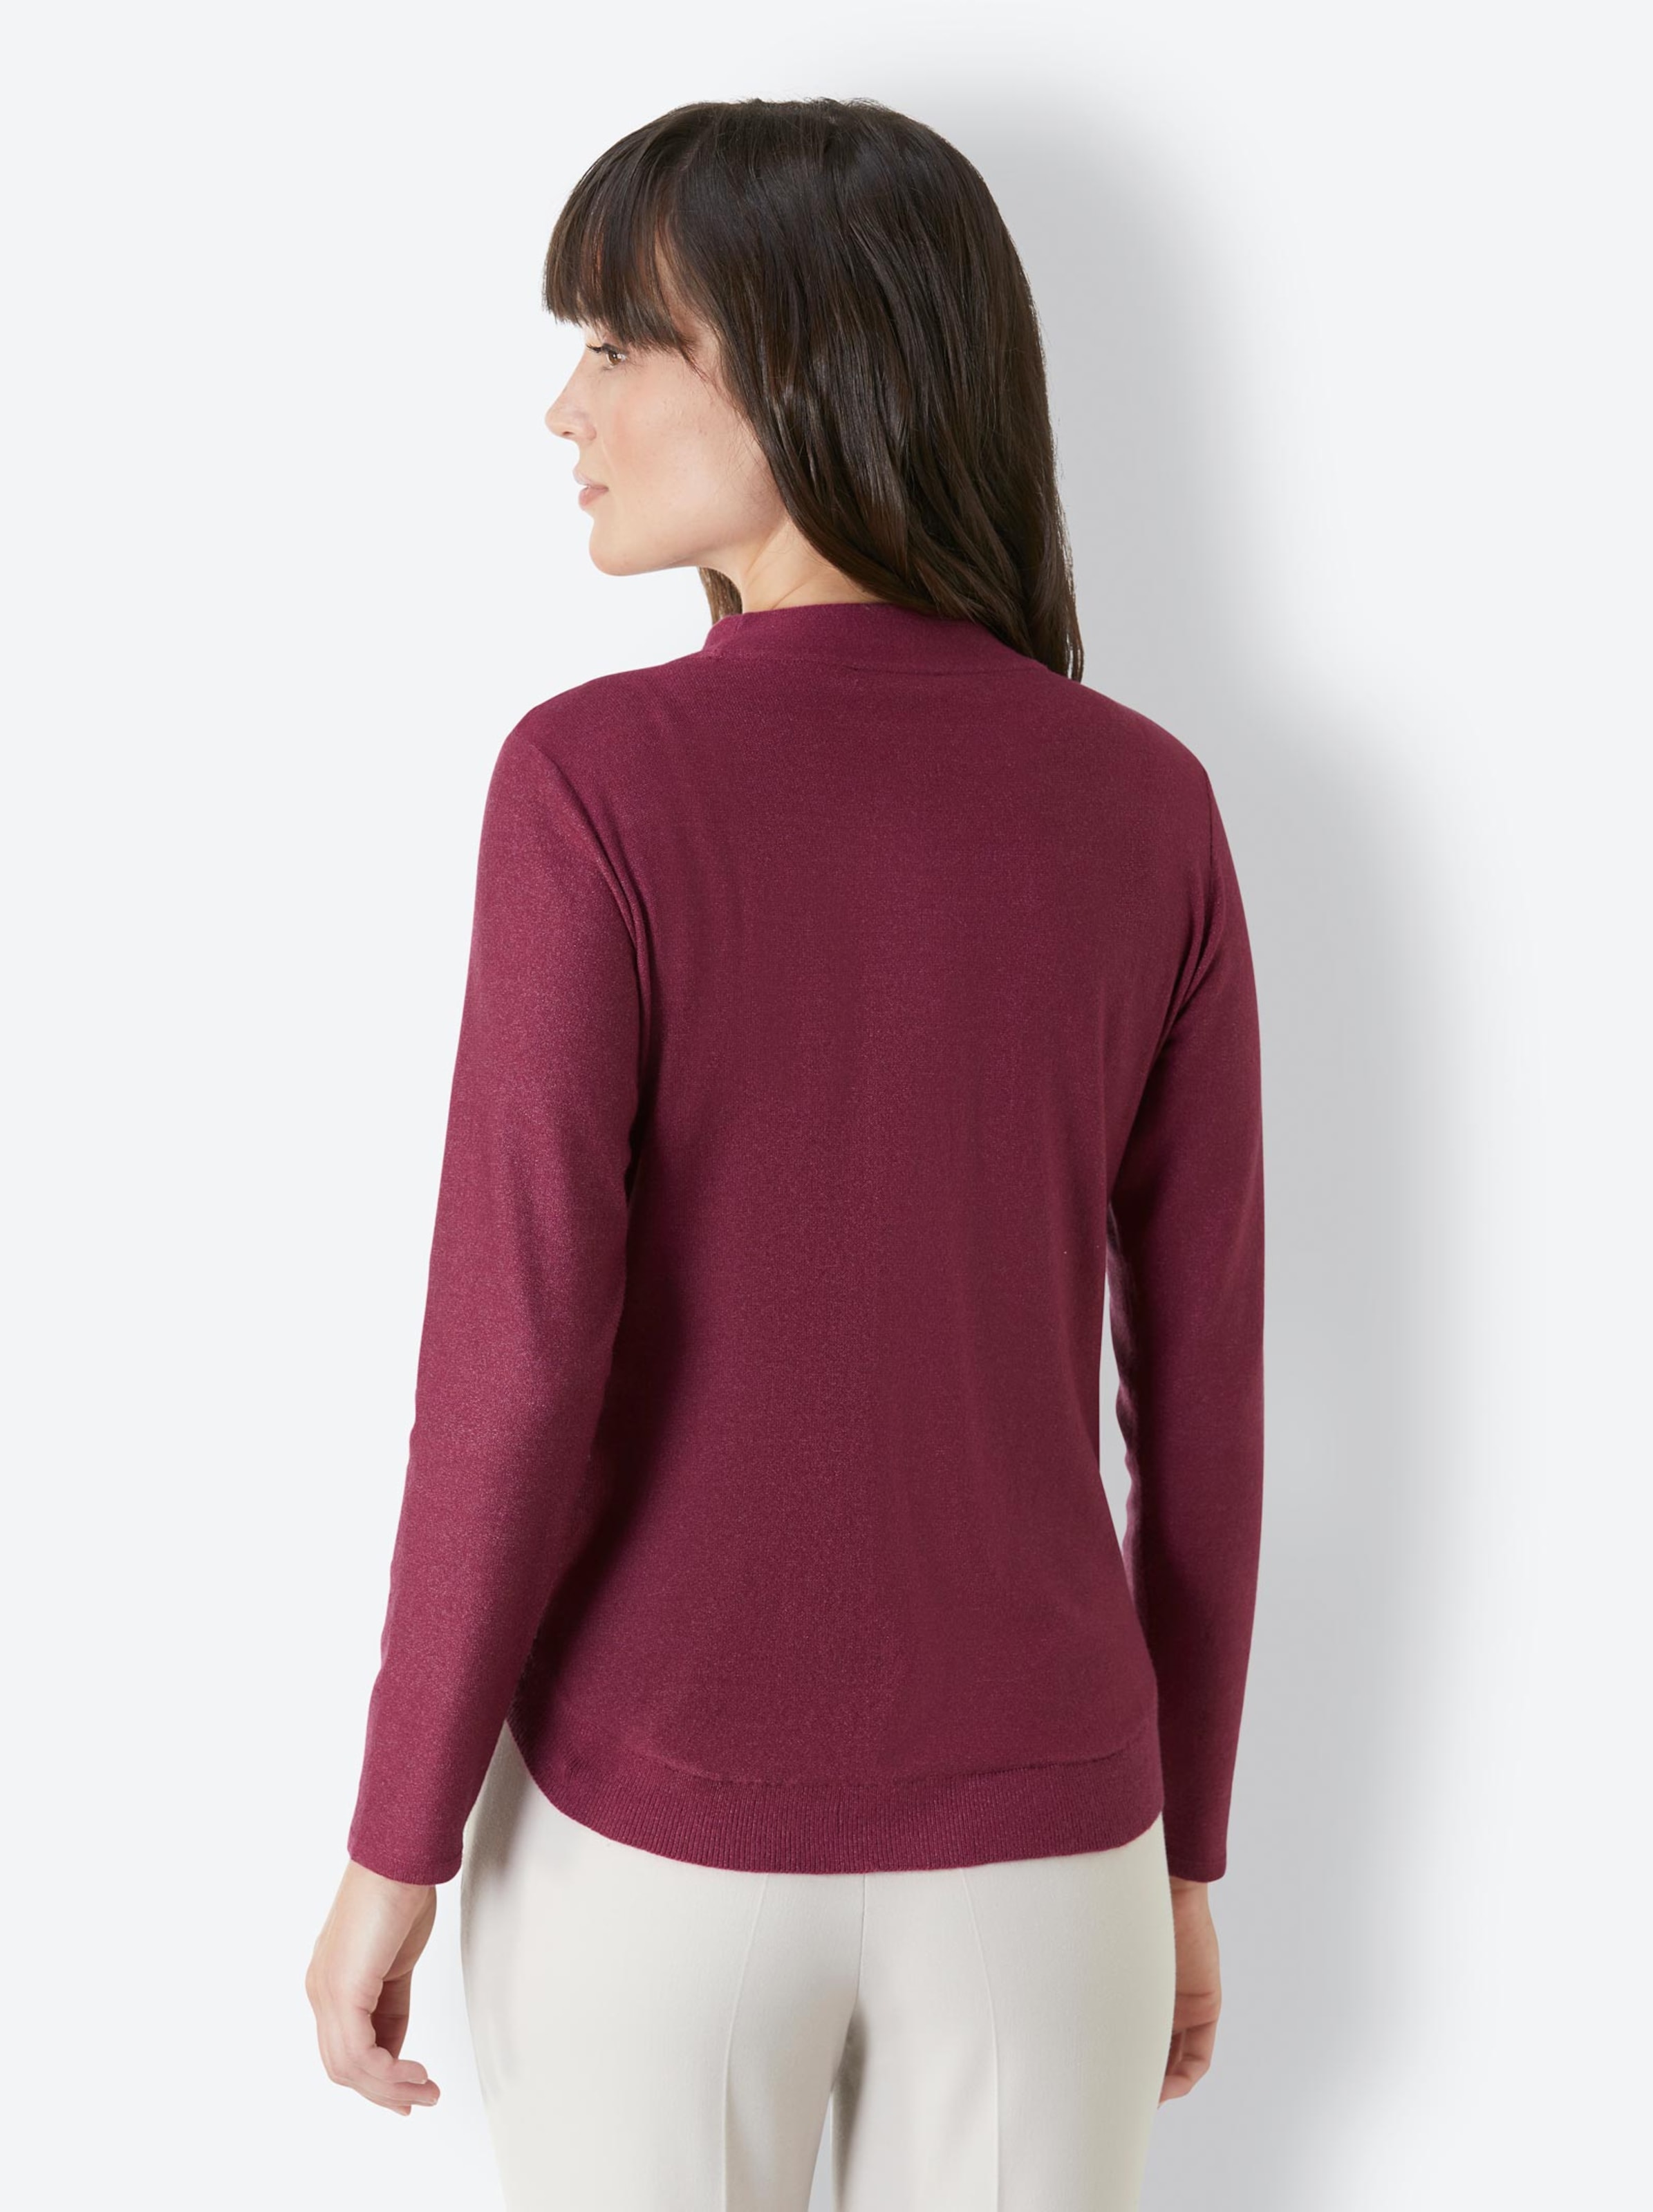 Damenmode Pullover Creation L Premium Modal-Viskose-Pullover in bordeaux-meliert 